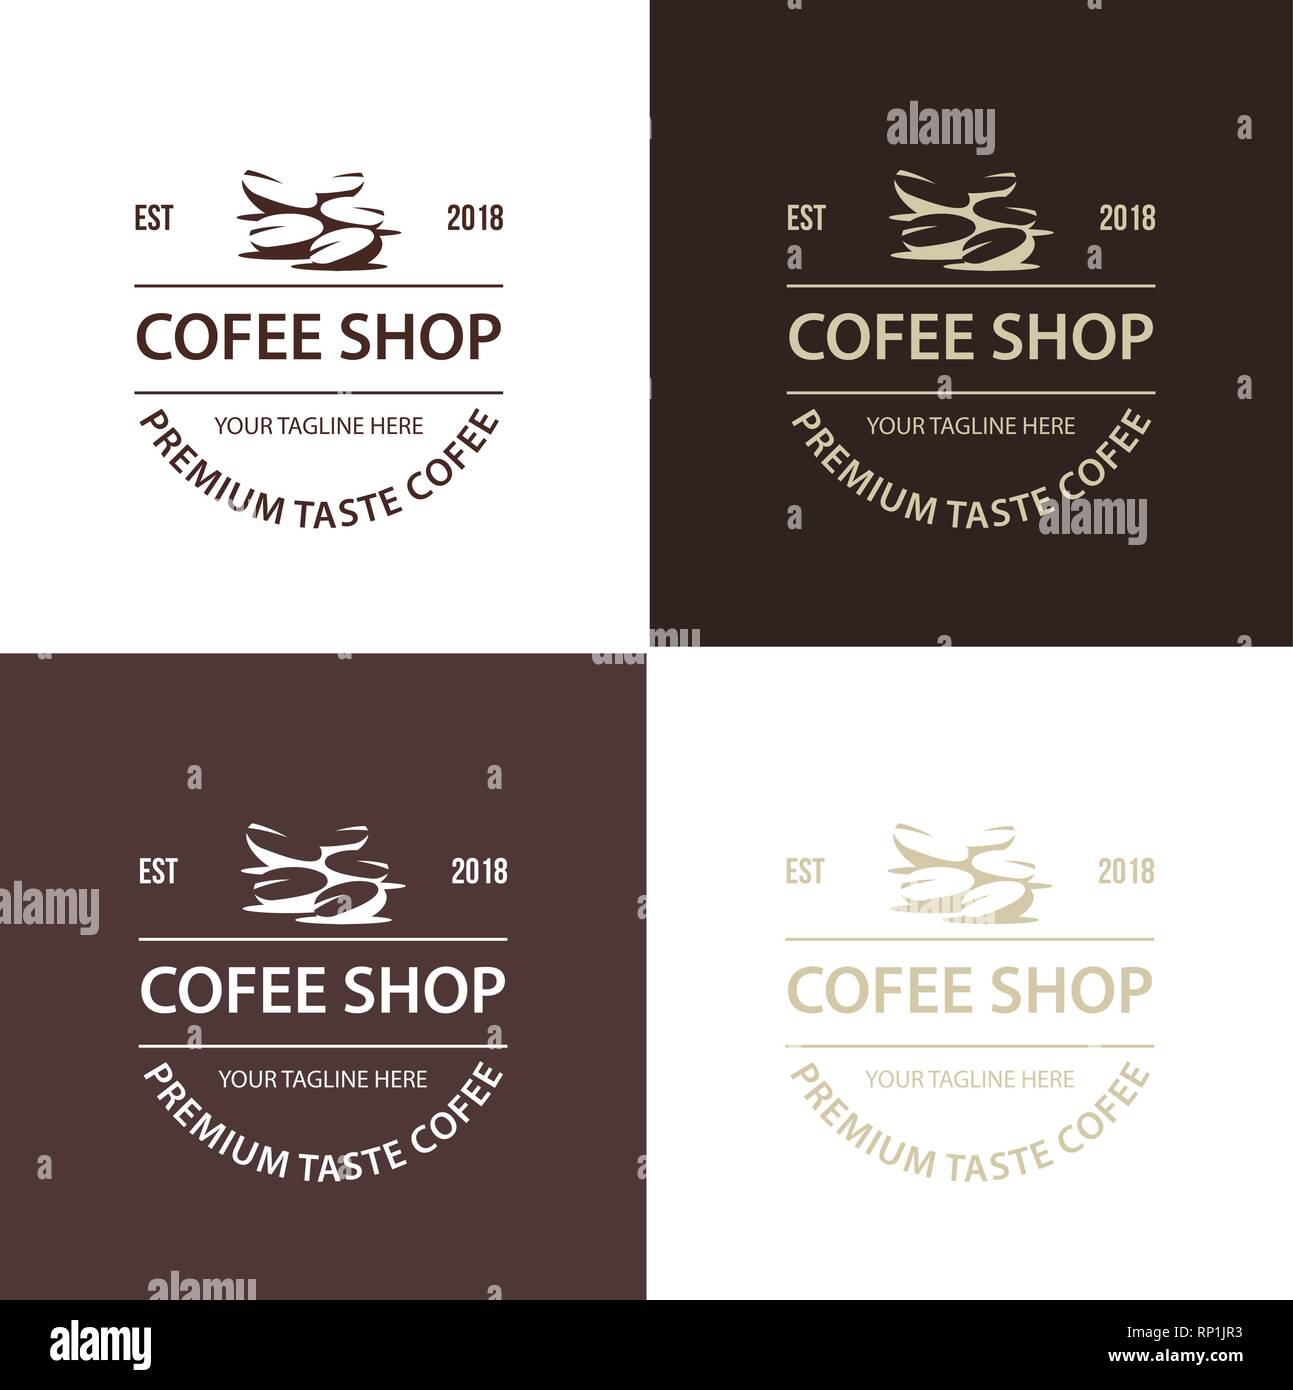 https://c8.alamy.com/comp/RP1JR3/vintage-coffee-shop-logo-vector-illustration-espresso-coffee-icon-symbol-espresso-coffee-sign-coffee-shop-logo-emblem-vector-RP1JR3.jpg